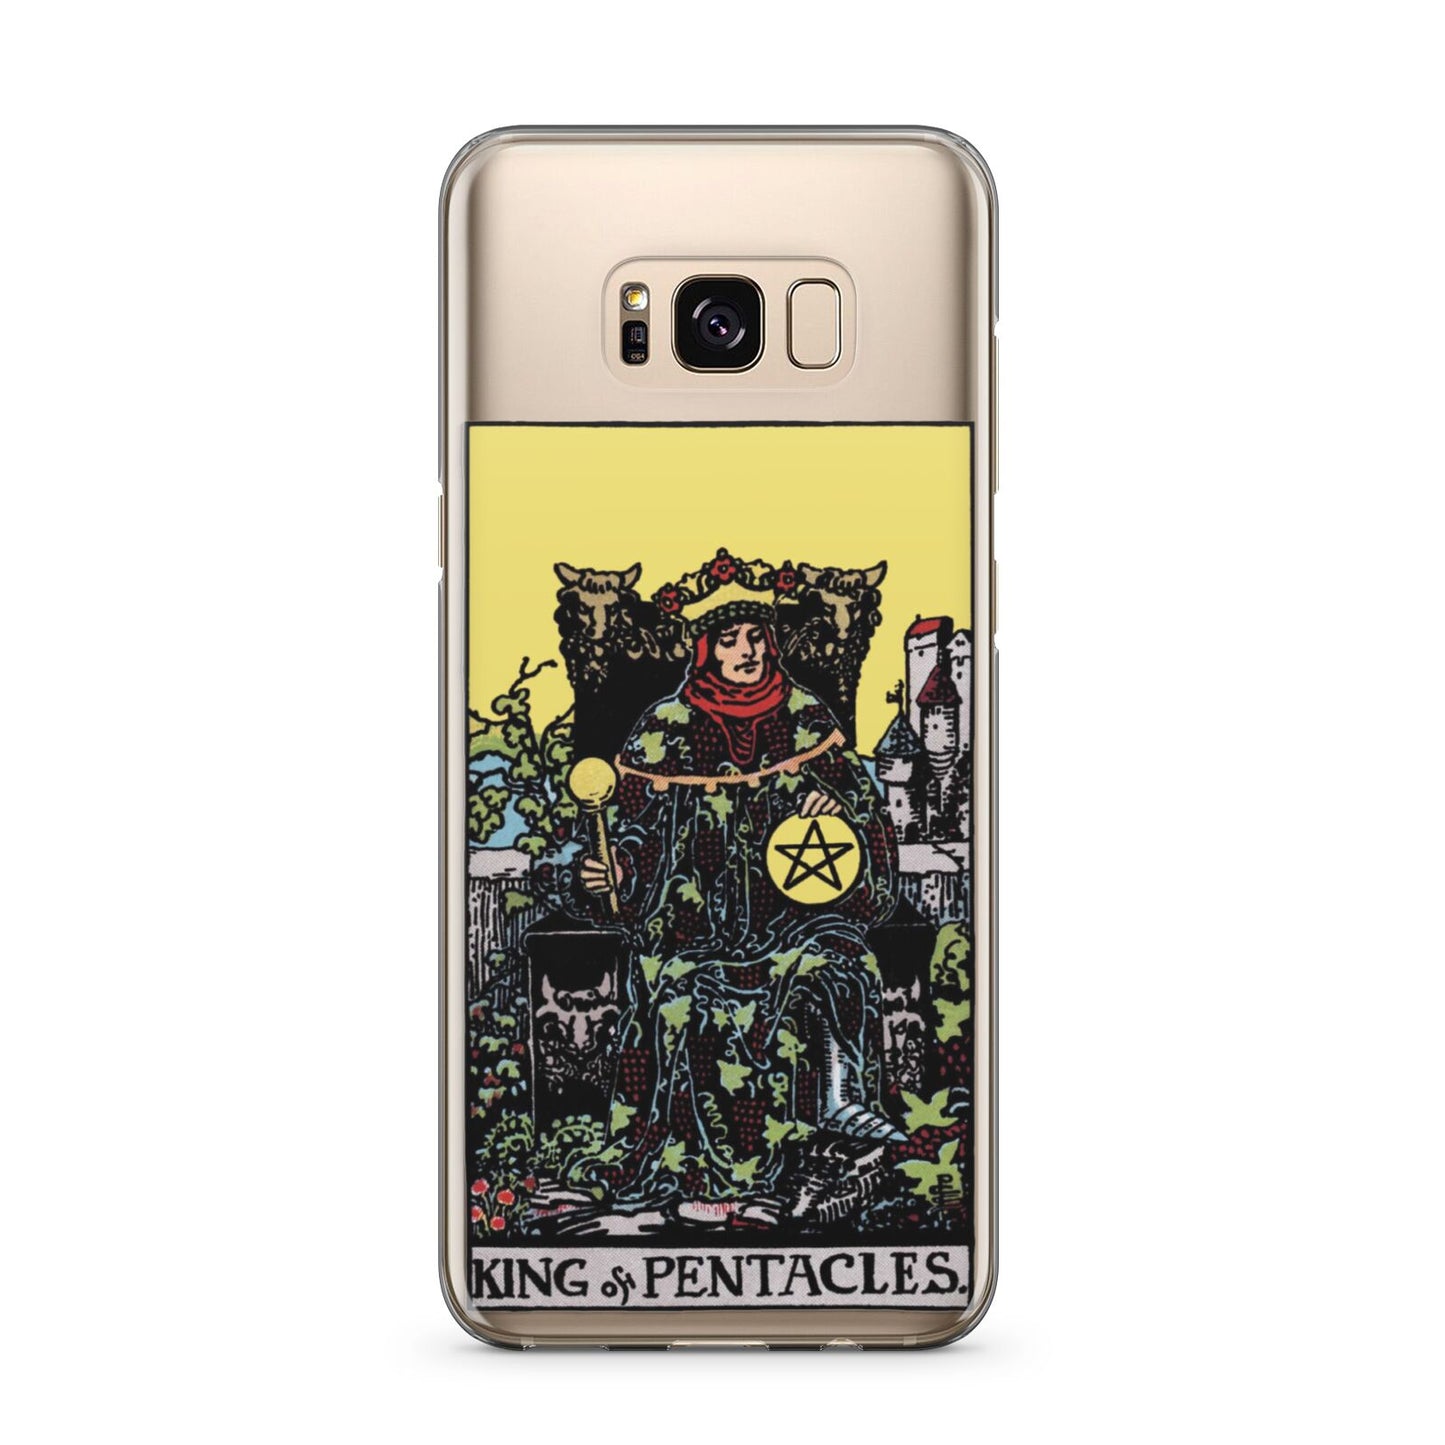 King of Pentacles Tarot Card Samsung Galaxy S8 Plus Case